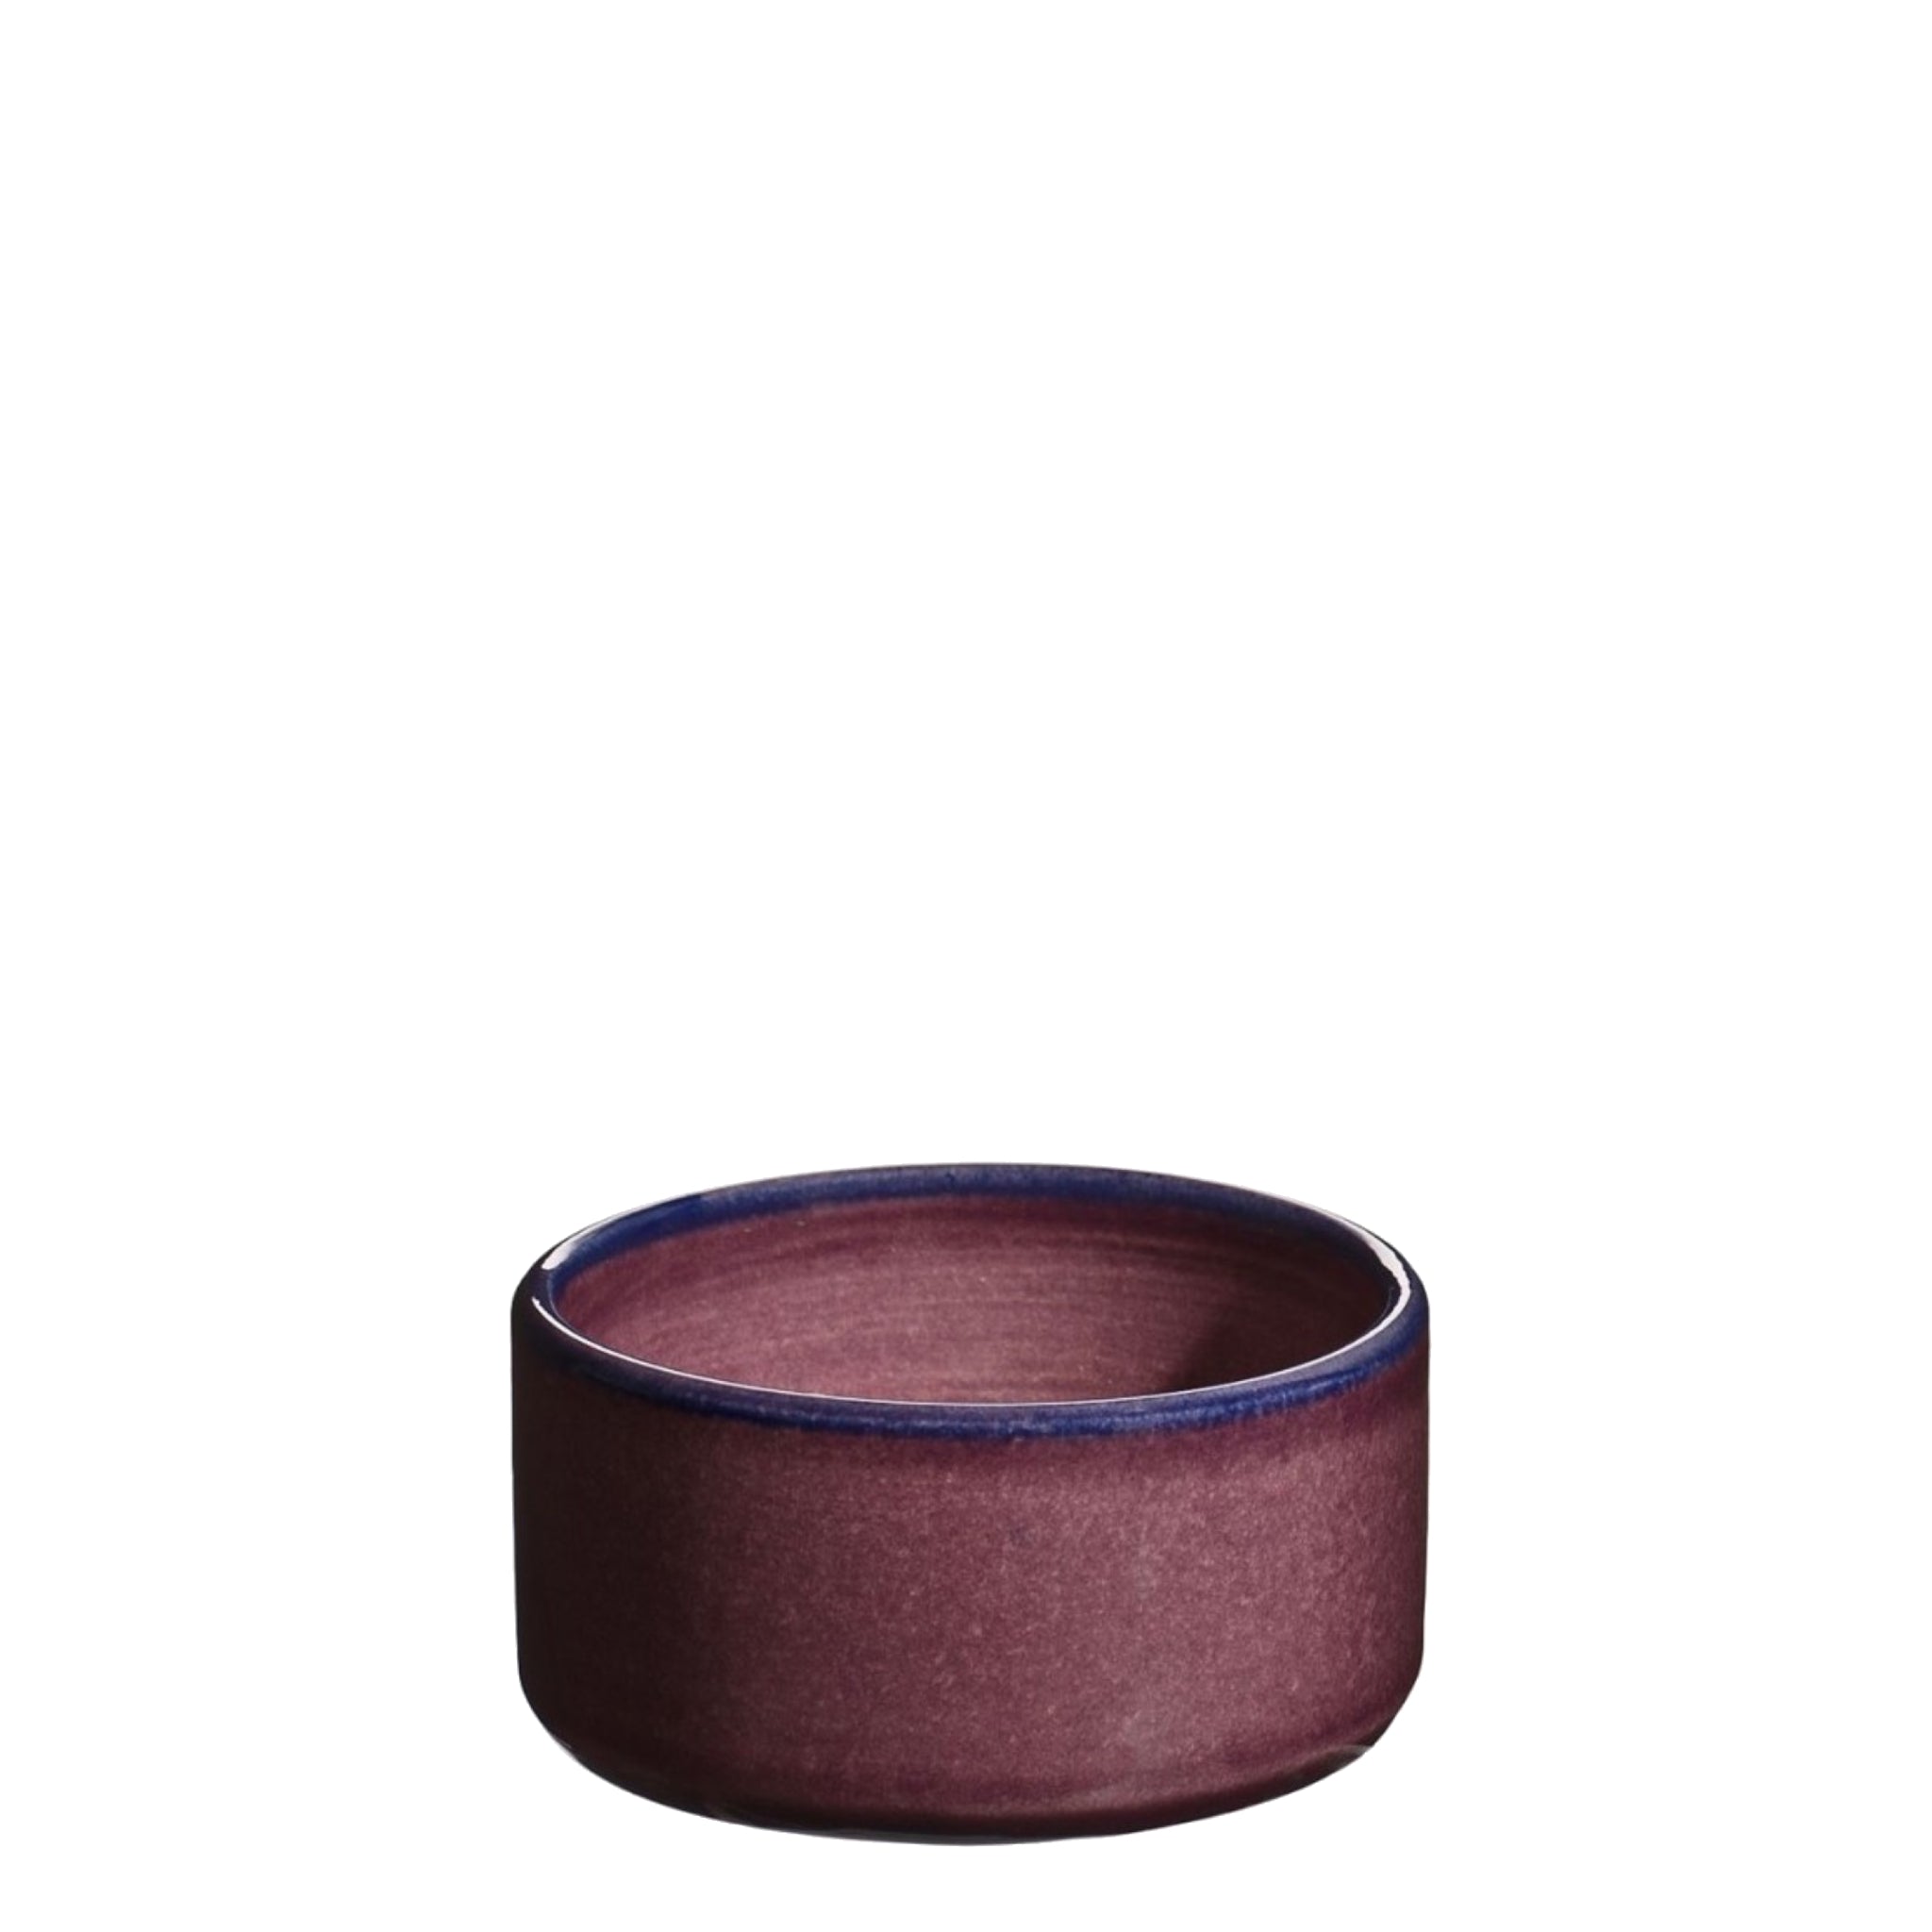 Ramekin, lille keramik skål, håndlavet fra Atelier Bernex i farven aubergine fra Oliviers & Co